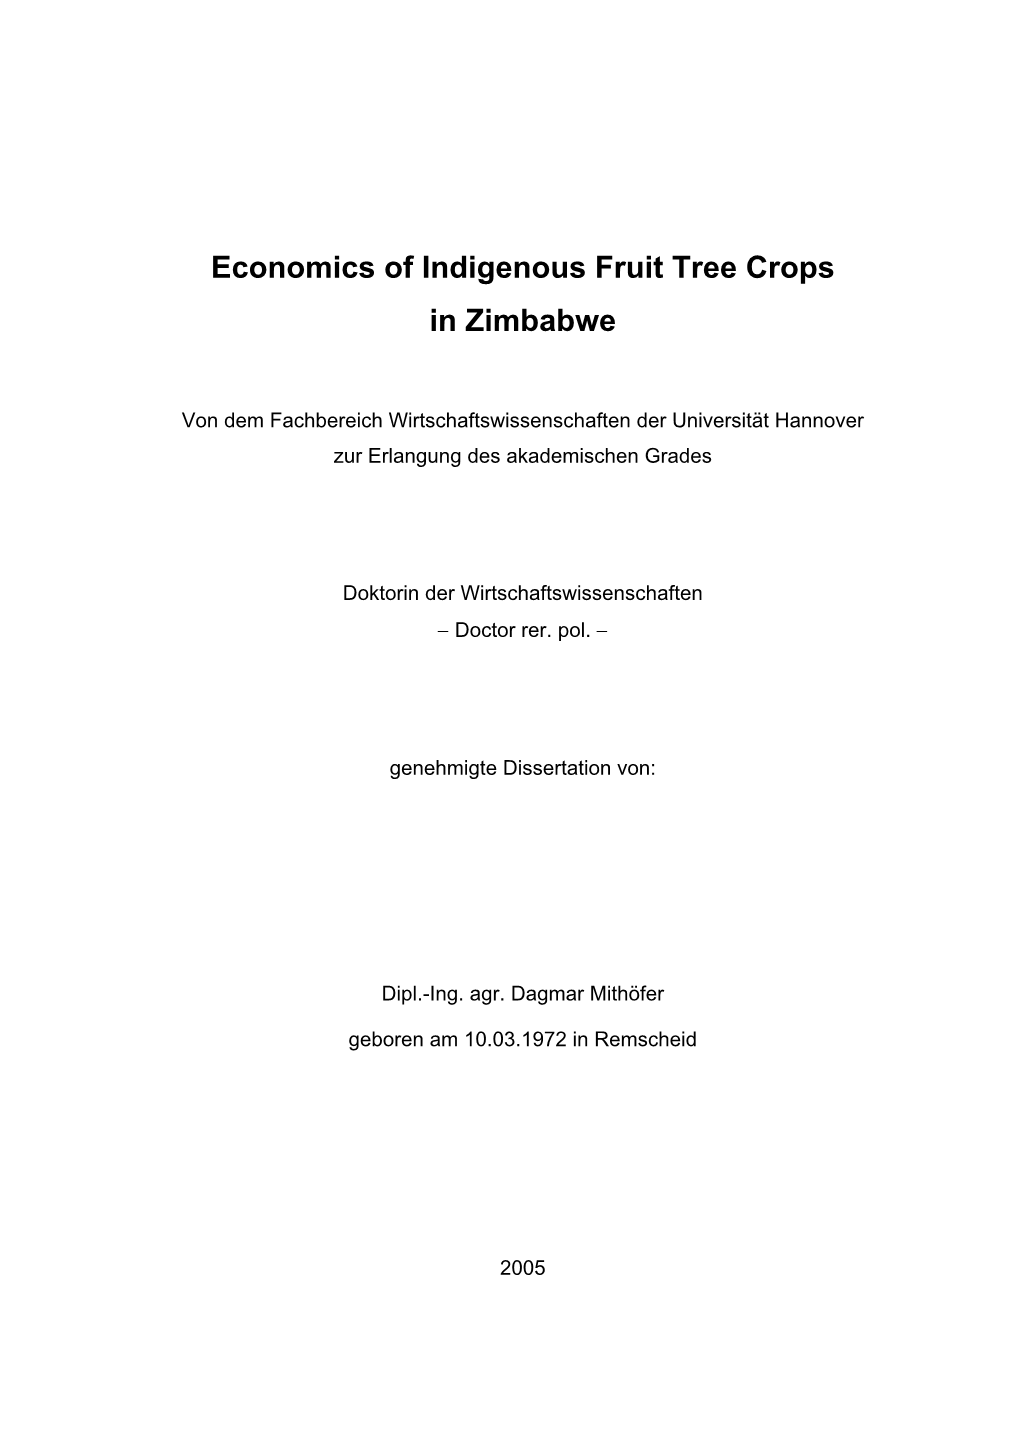 Economics of Indigenous Fruit Tree Crops in Zimbabwe